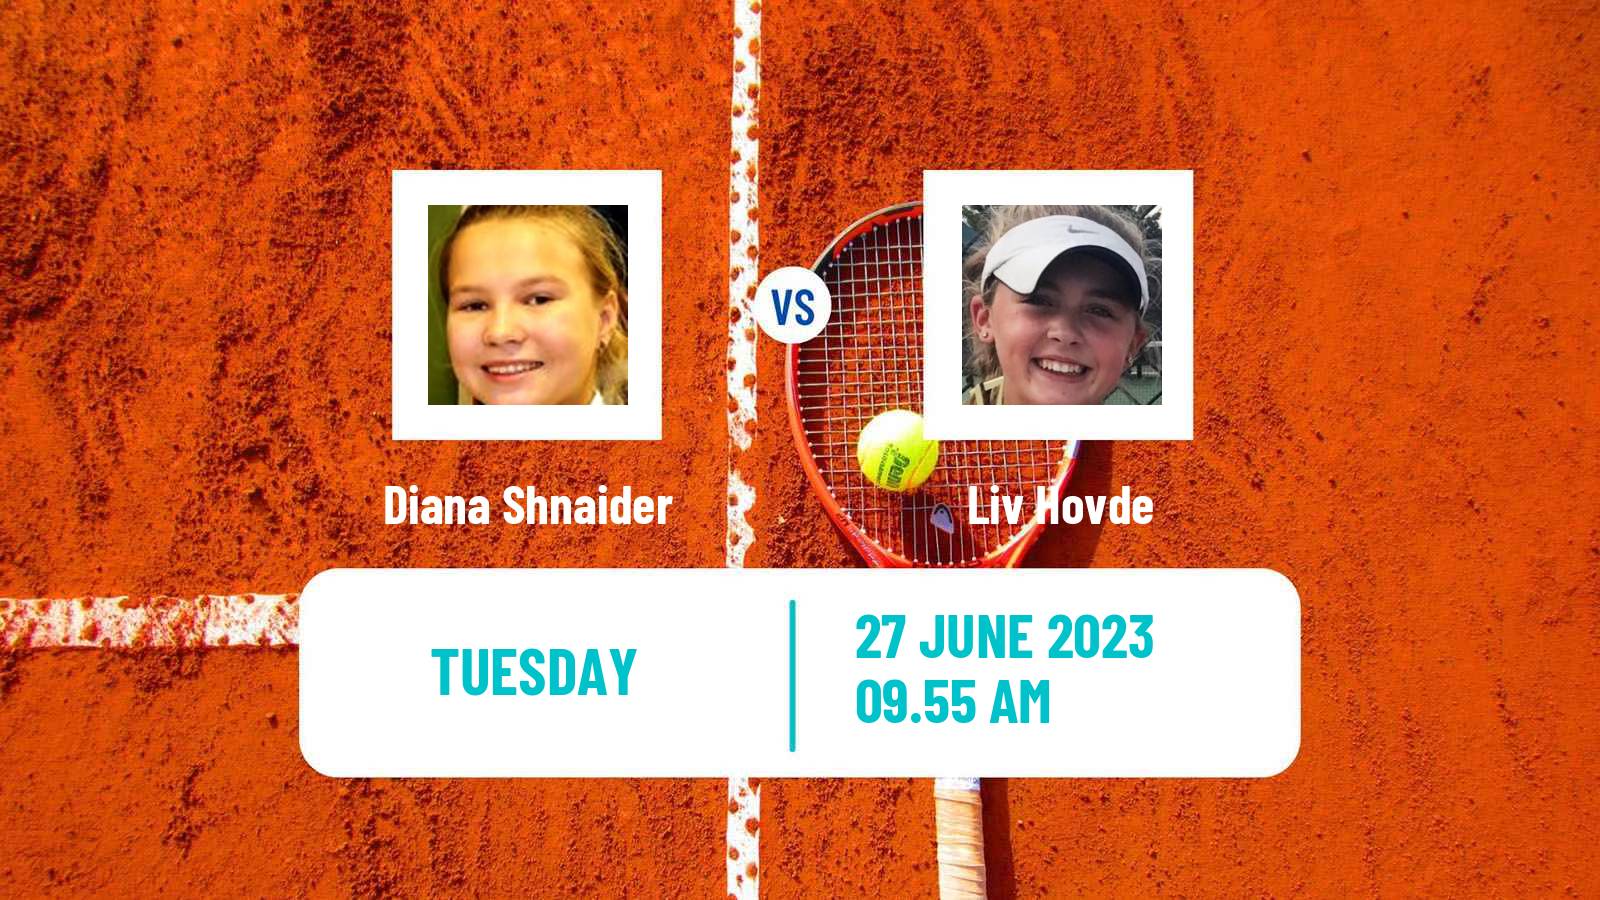 Tennis WTA Wimbledon Diana Shnaider - Liv Hovde